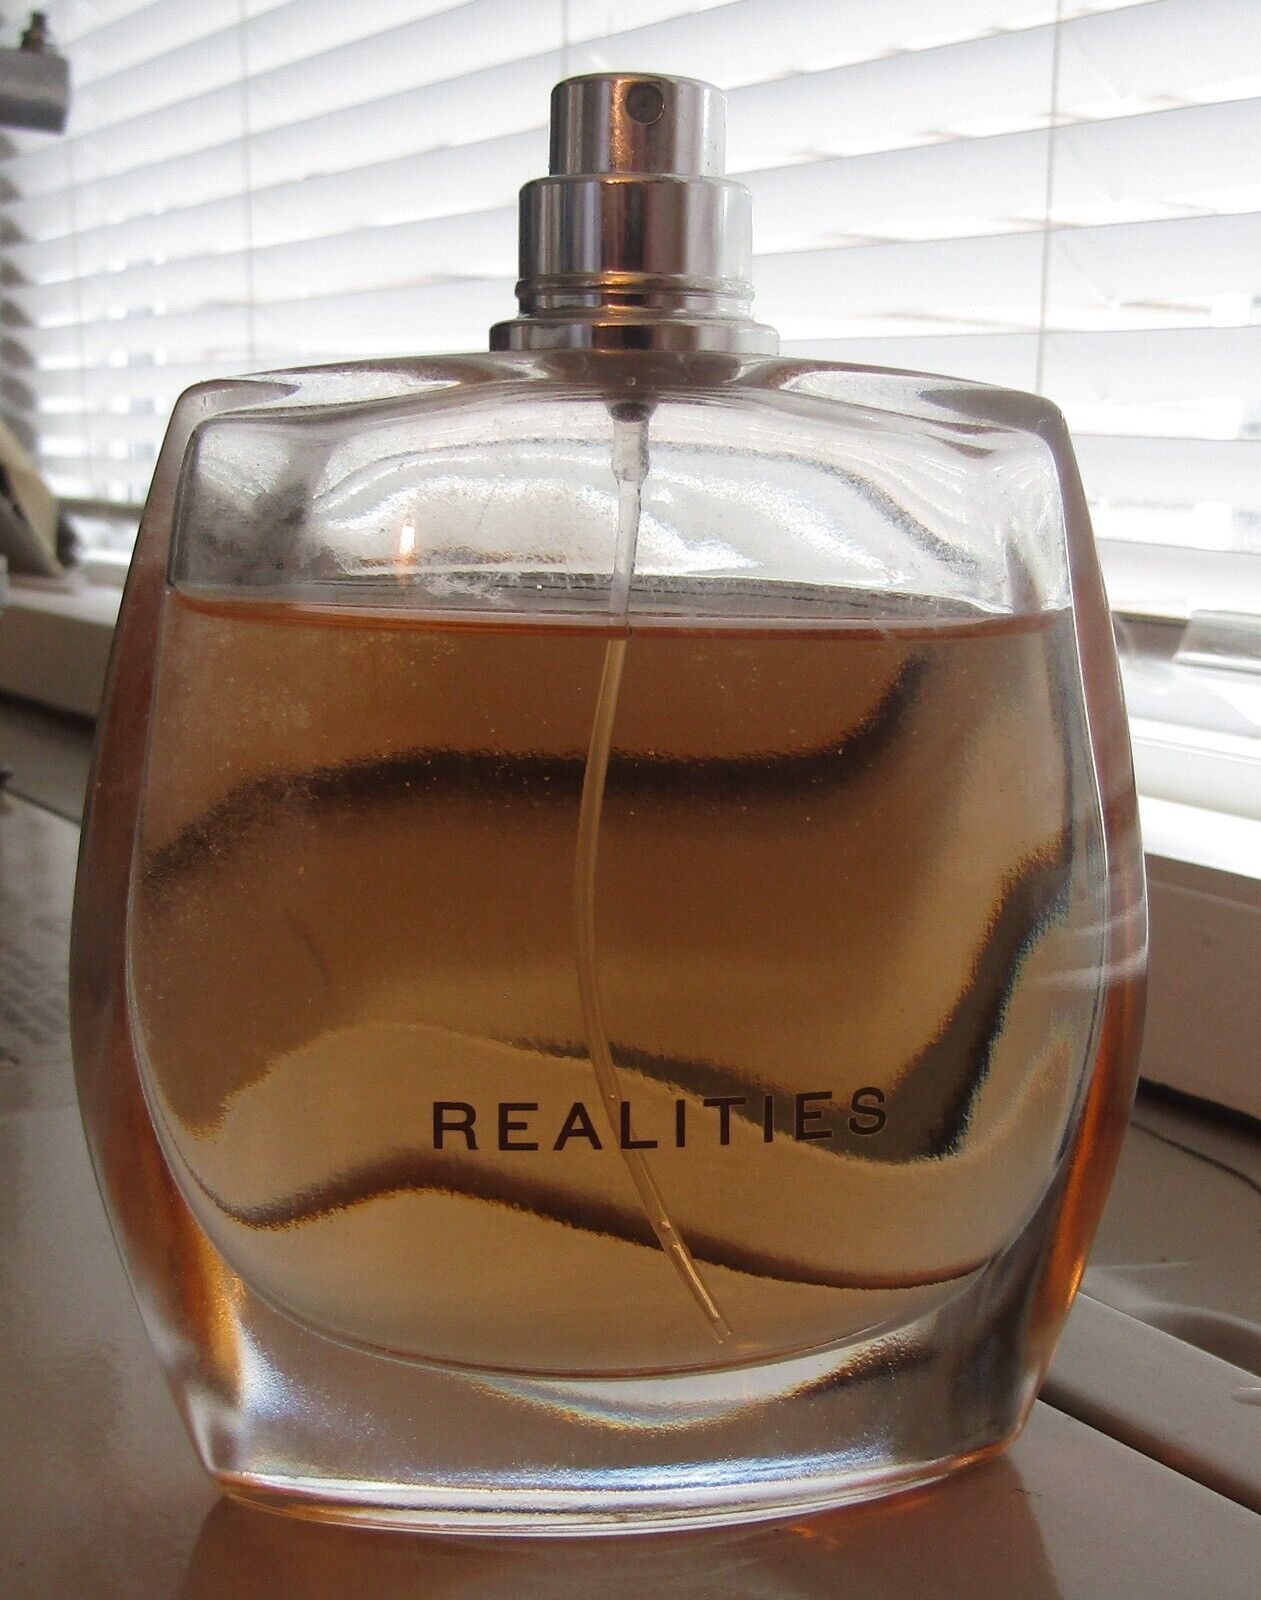 Realities Eau de Parfum Spray by Liz Claiborne - 3.4 oz 90% full no box